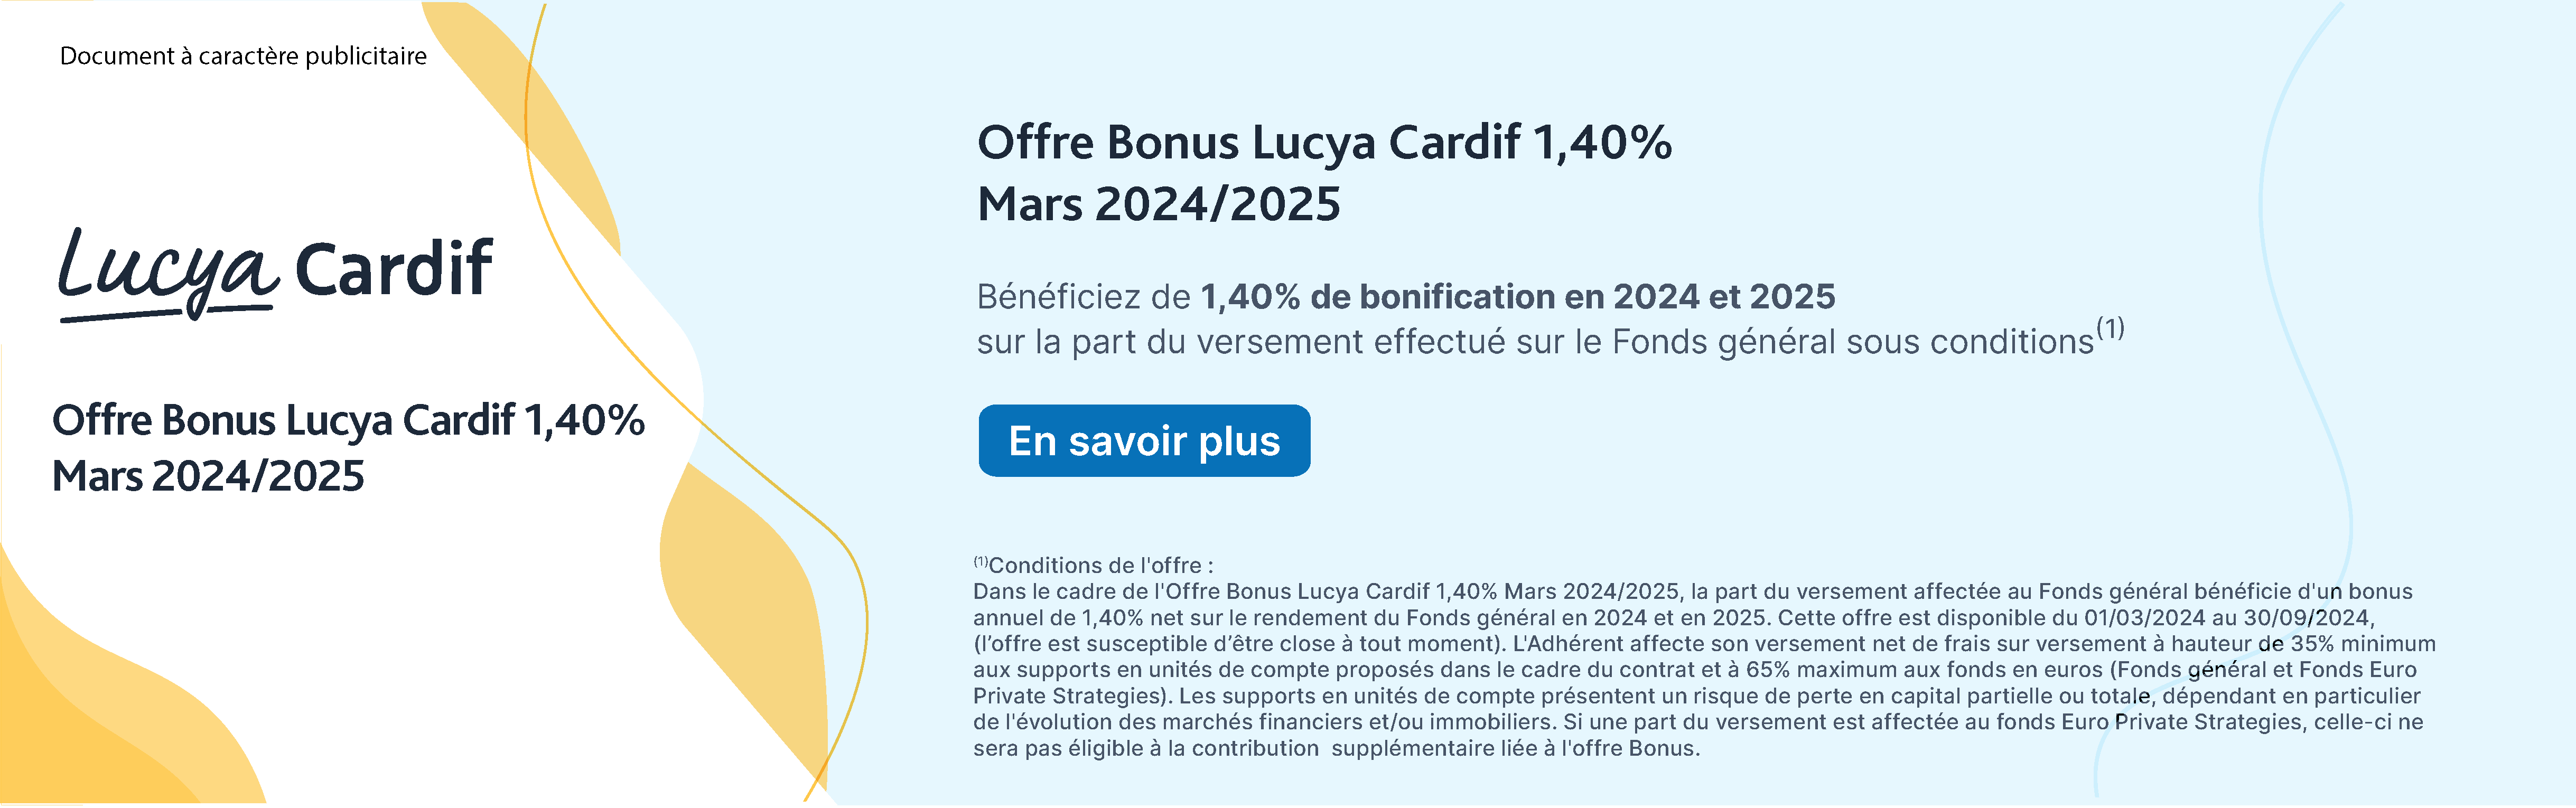 Assurance vie en ligne :Offre Bonus Lucya Cardif 2024/2025